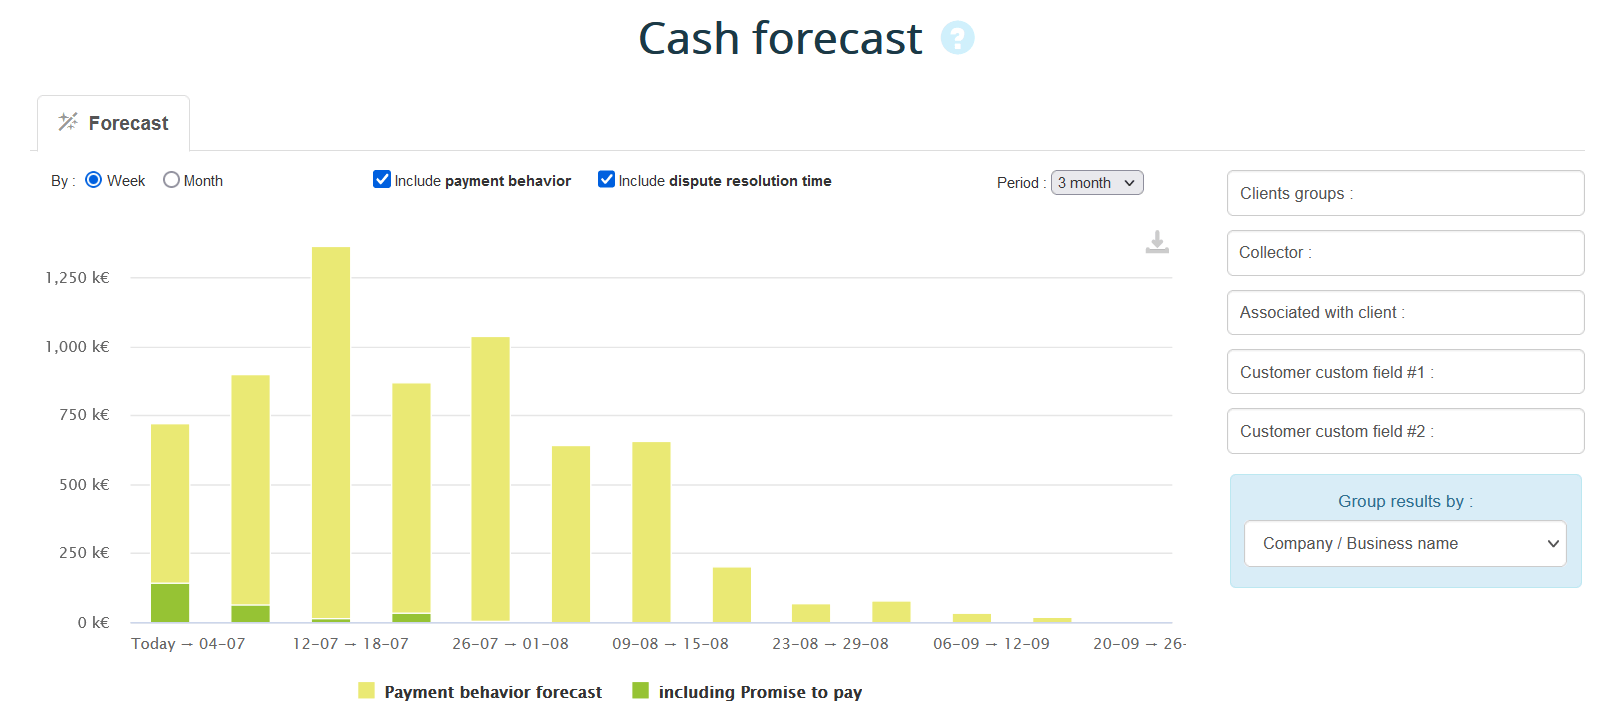 Cash forecast report